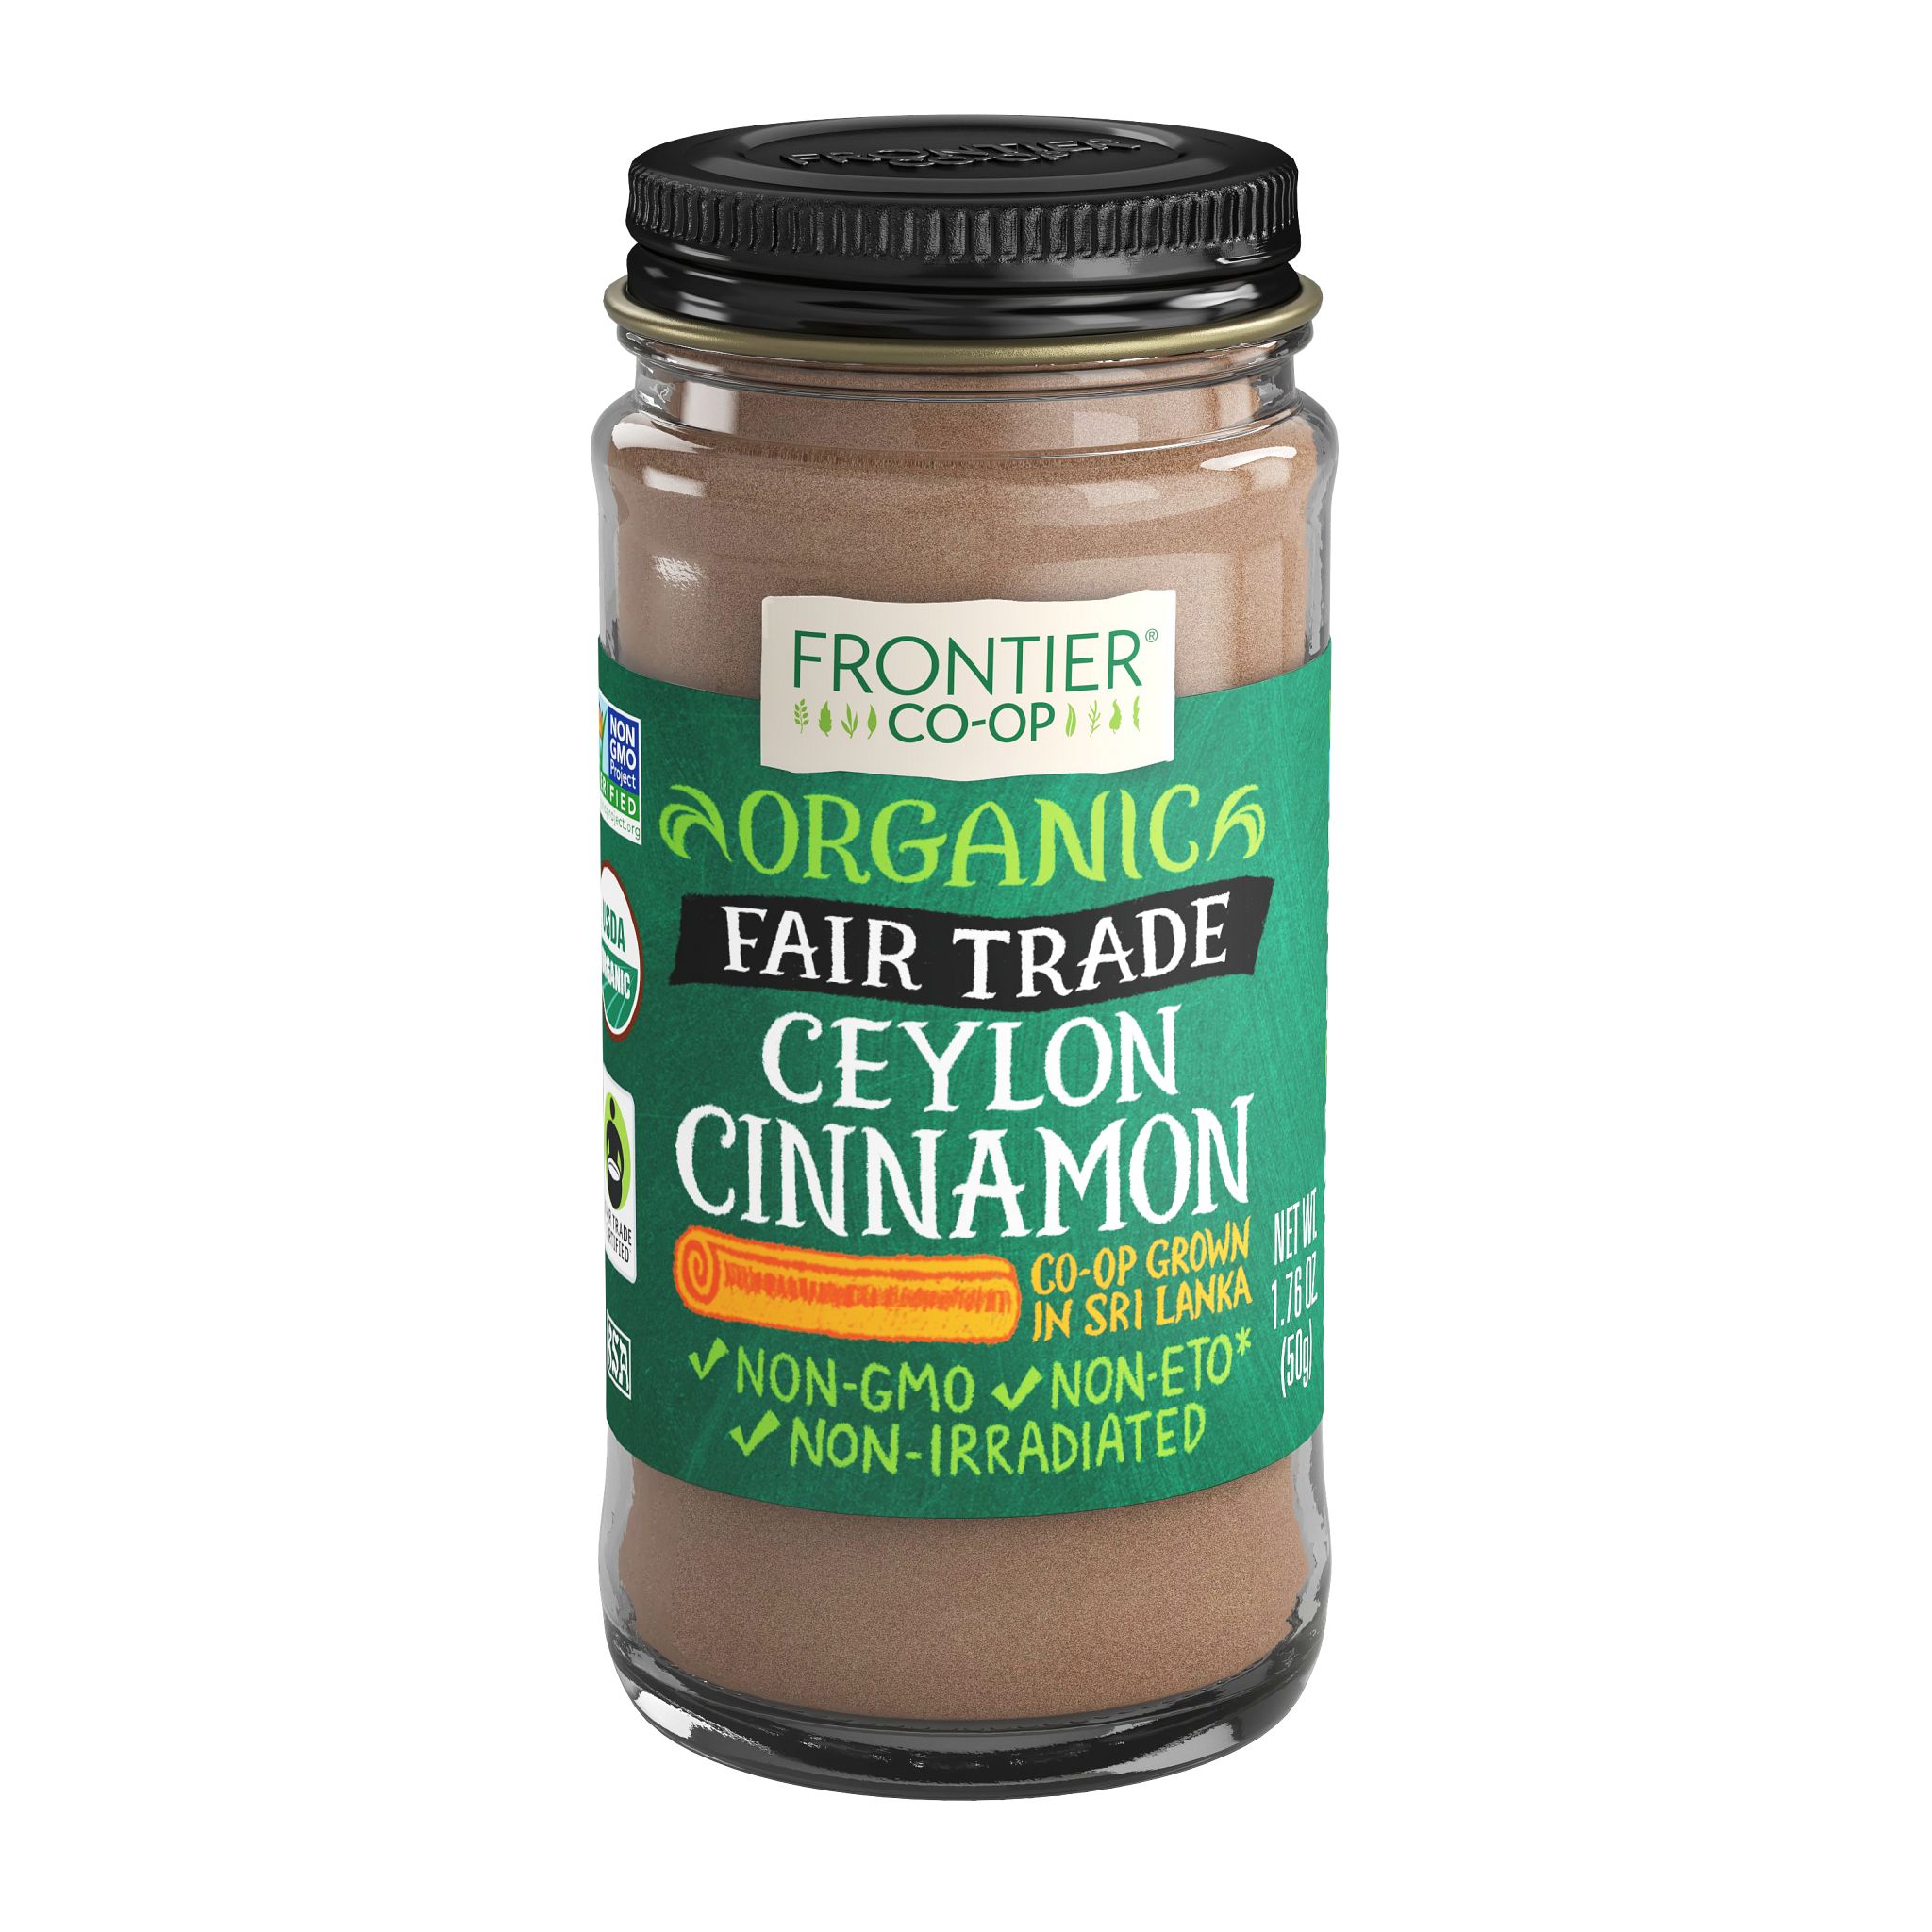 Frontier Co-op Fair Trade Organic Ceylon Cinnamon, 1.76 oz. - image 1 of 7